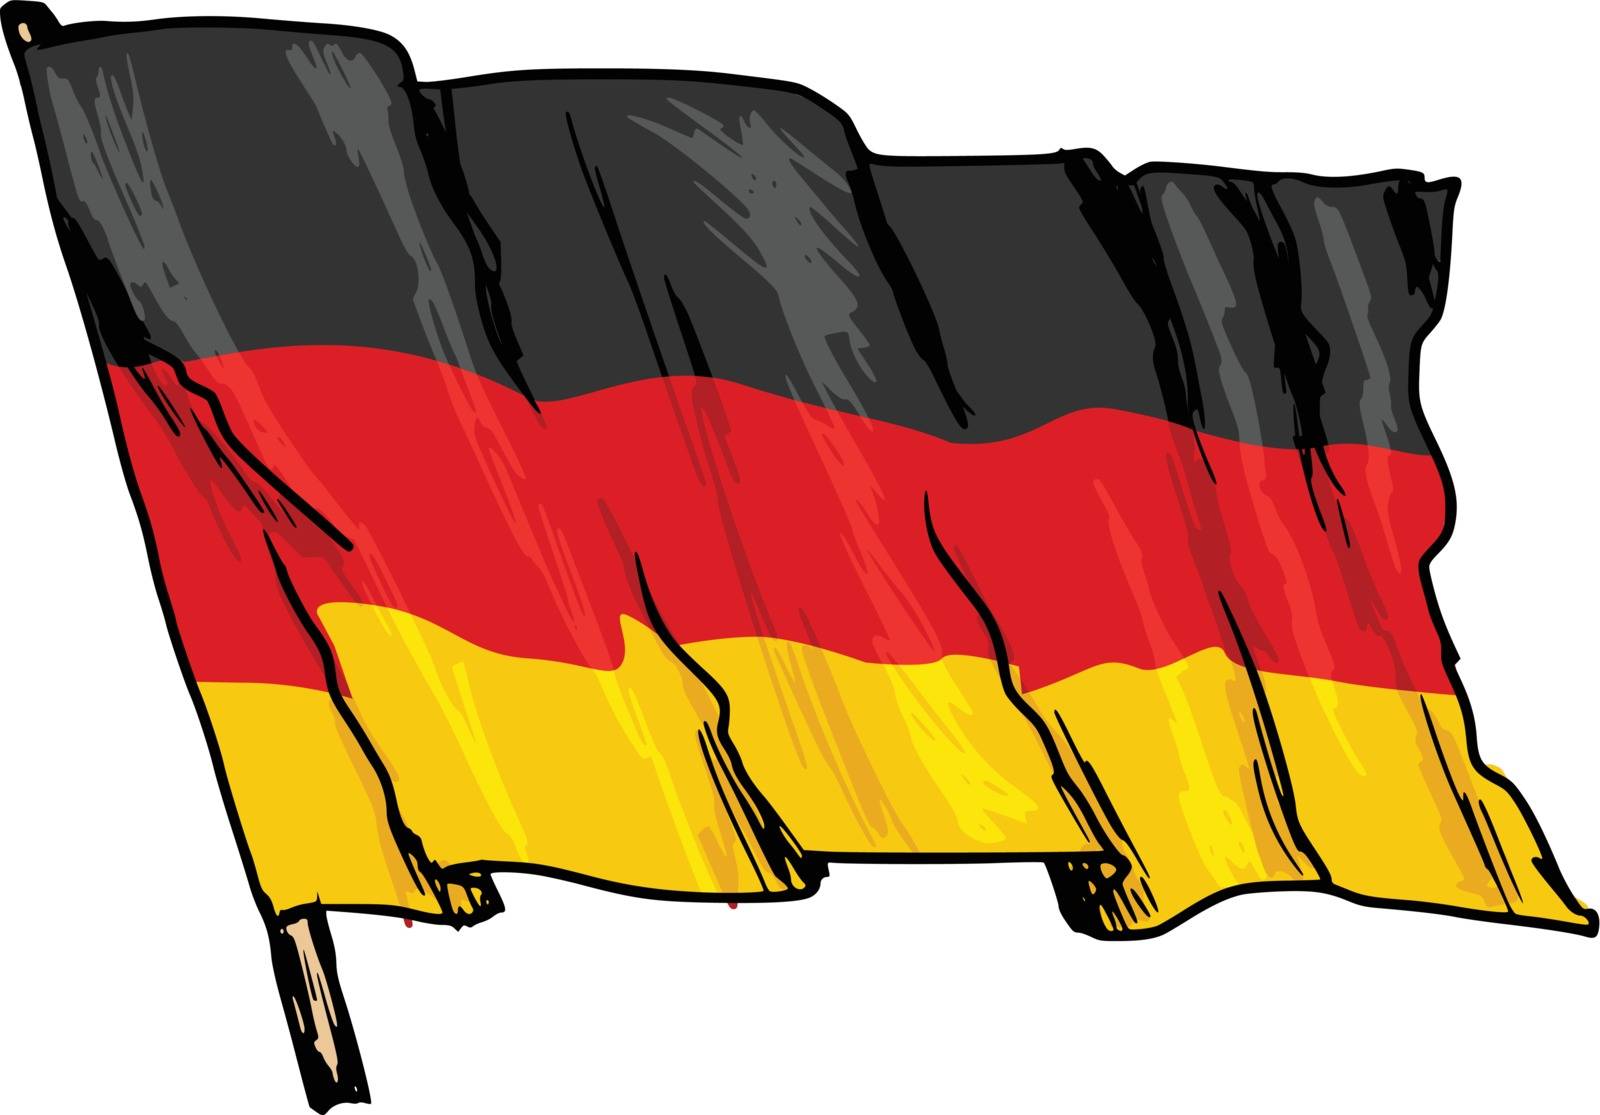 hand drawn, sketch, illustration of flag of Germany